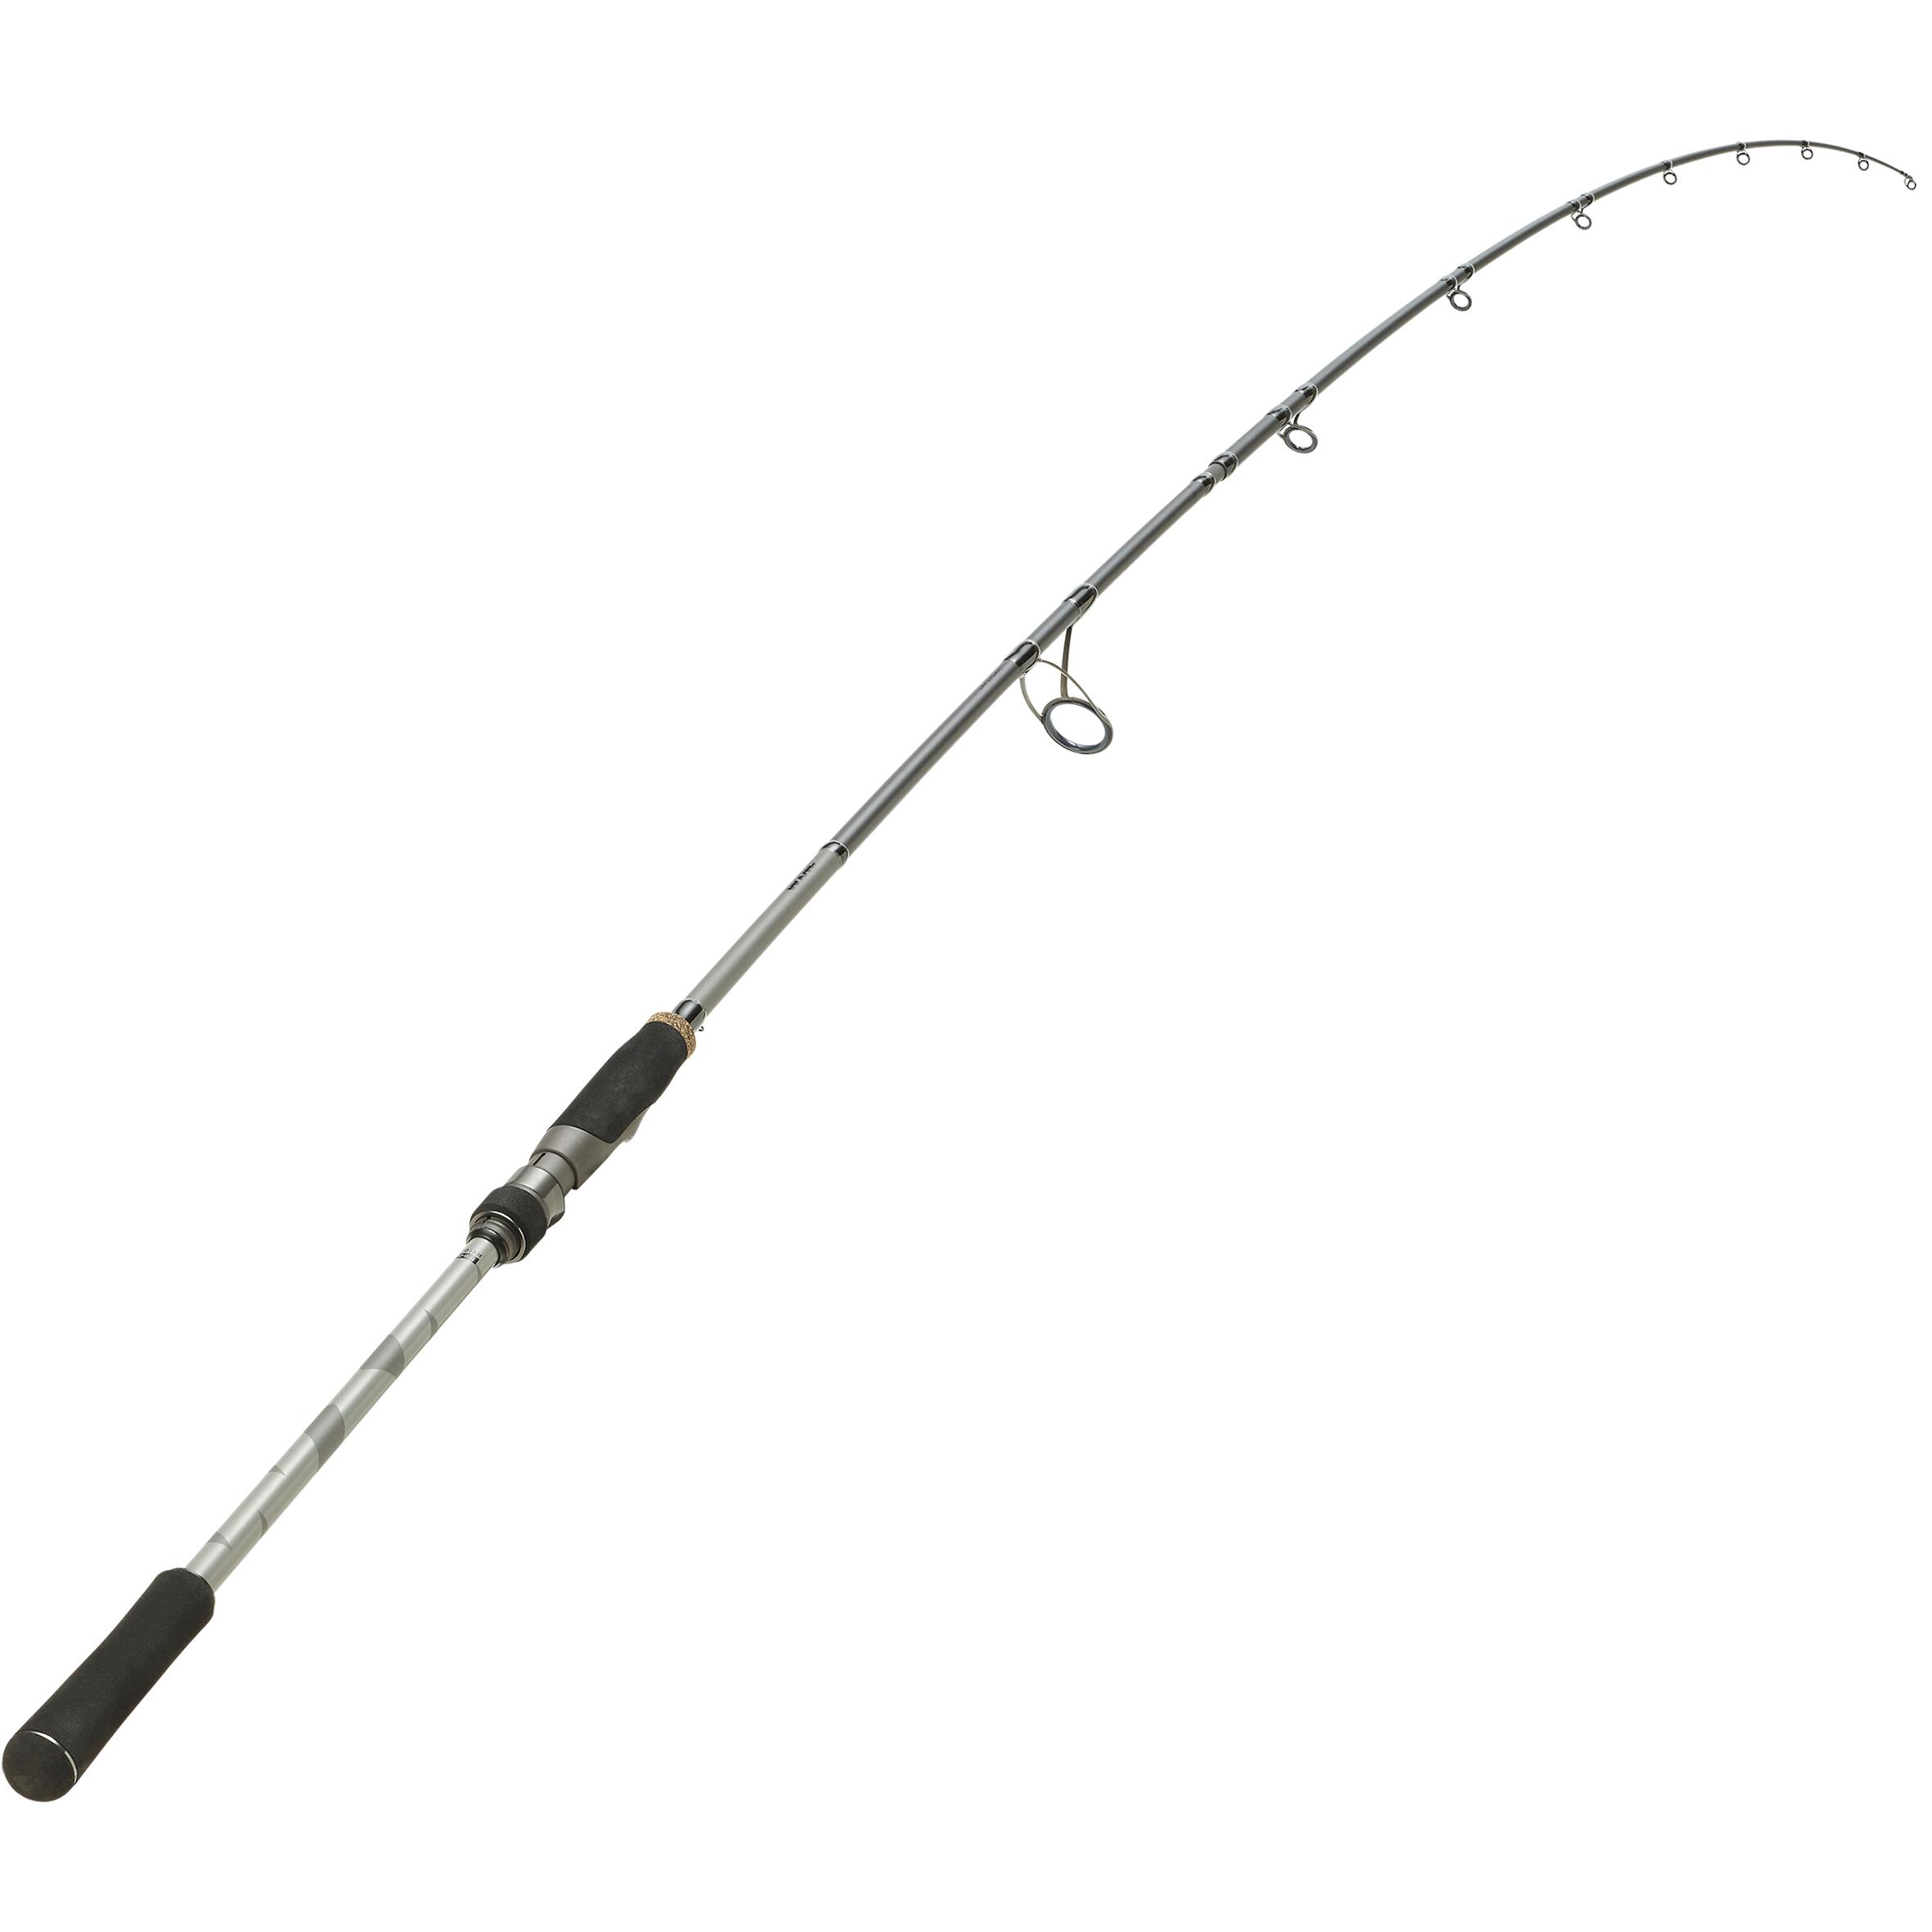 LURE FISHING ROD WXM-5 210 XH 2/11